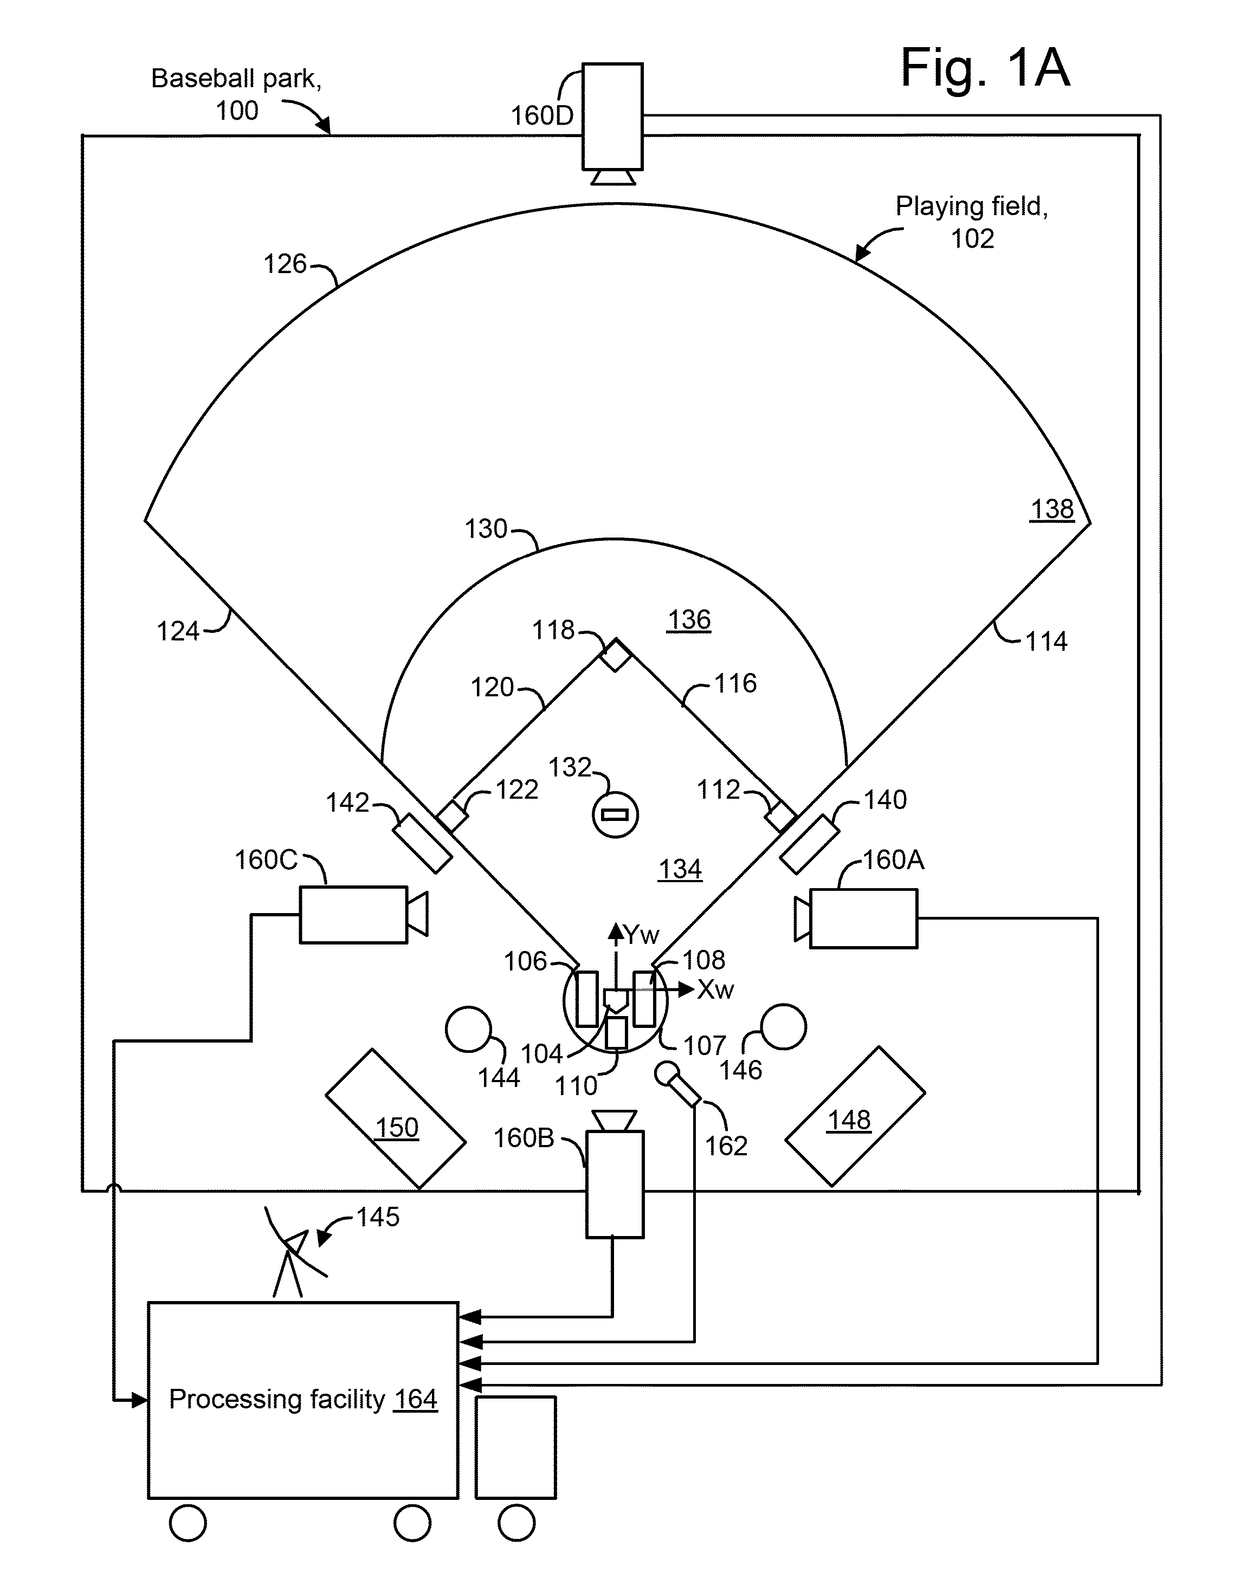 Automated or assisted umpiring of baseball game using computer vision